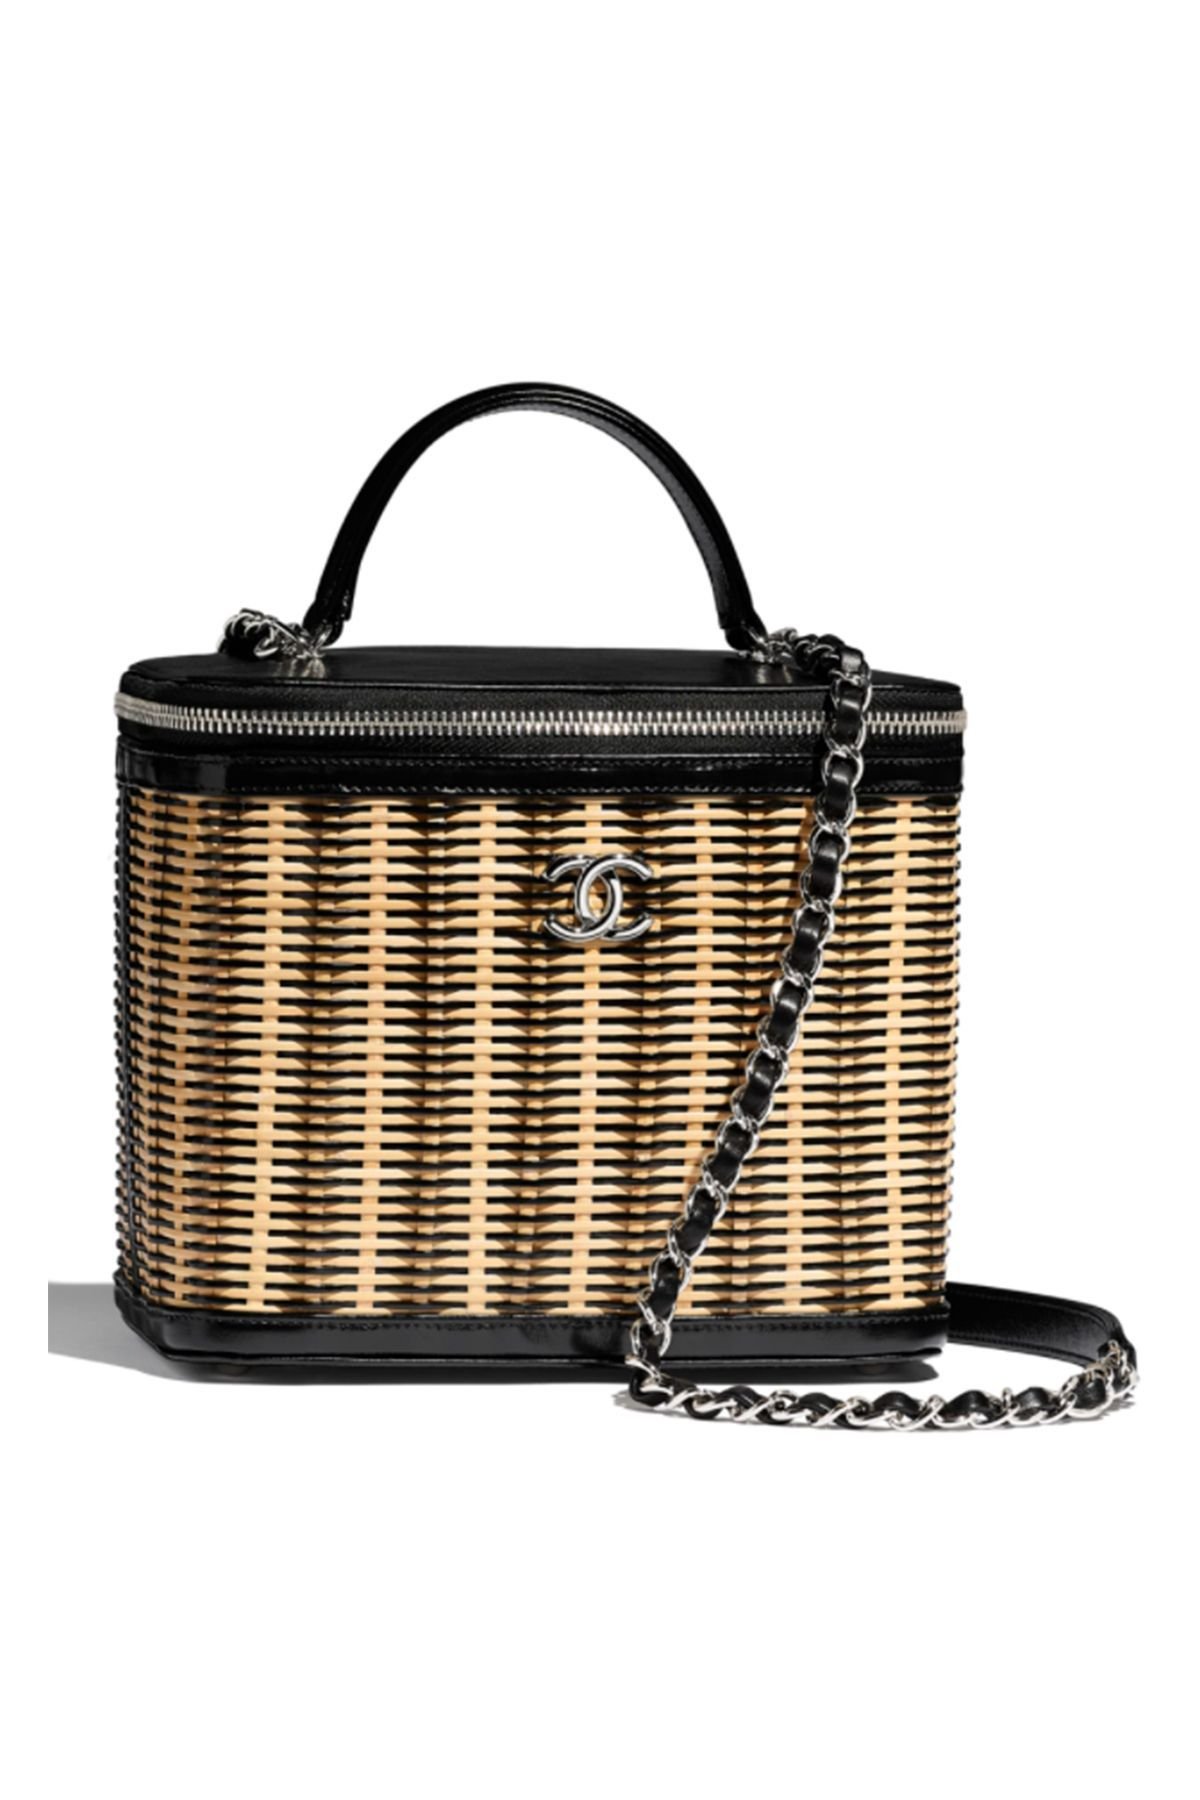 Chanel Small Vanity Case Bag in CalfskinRaffia.jpg